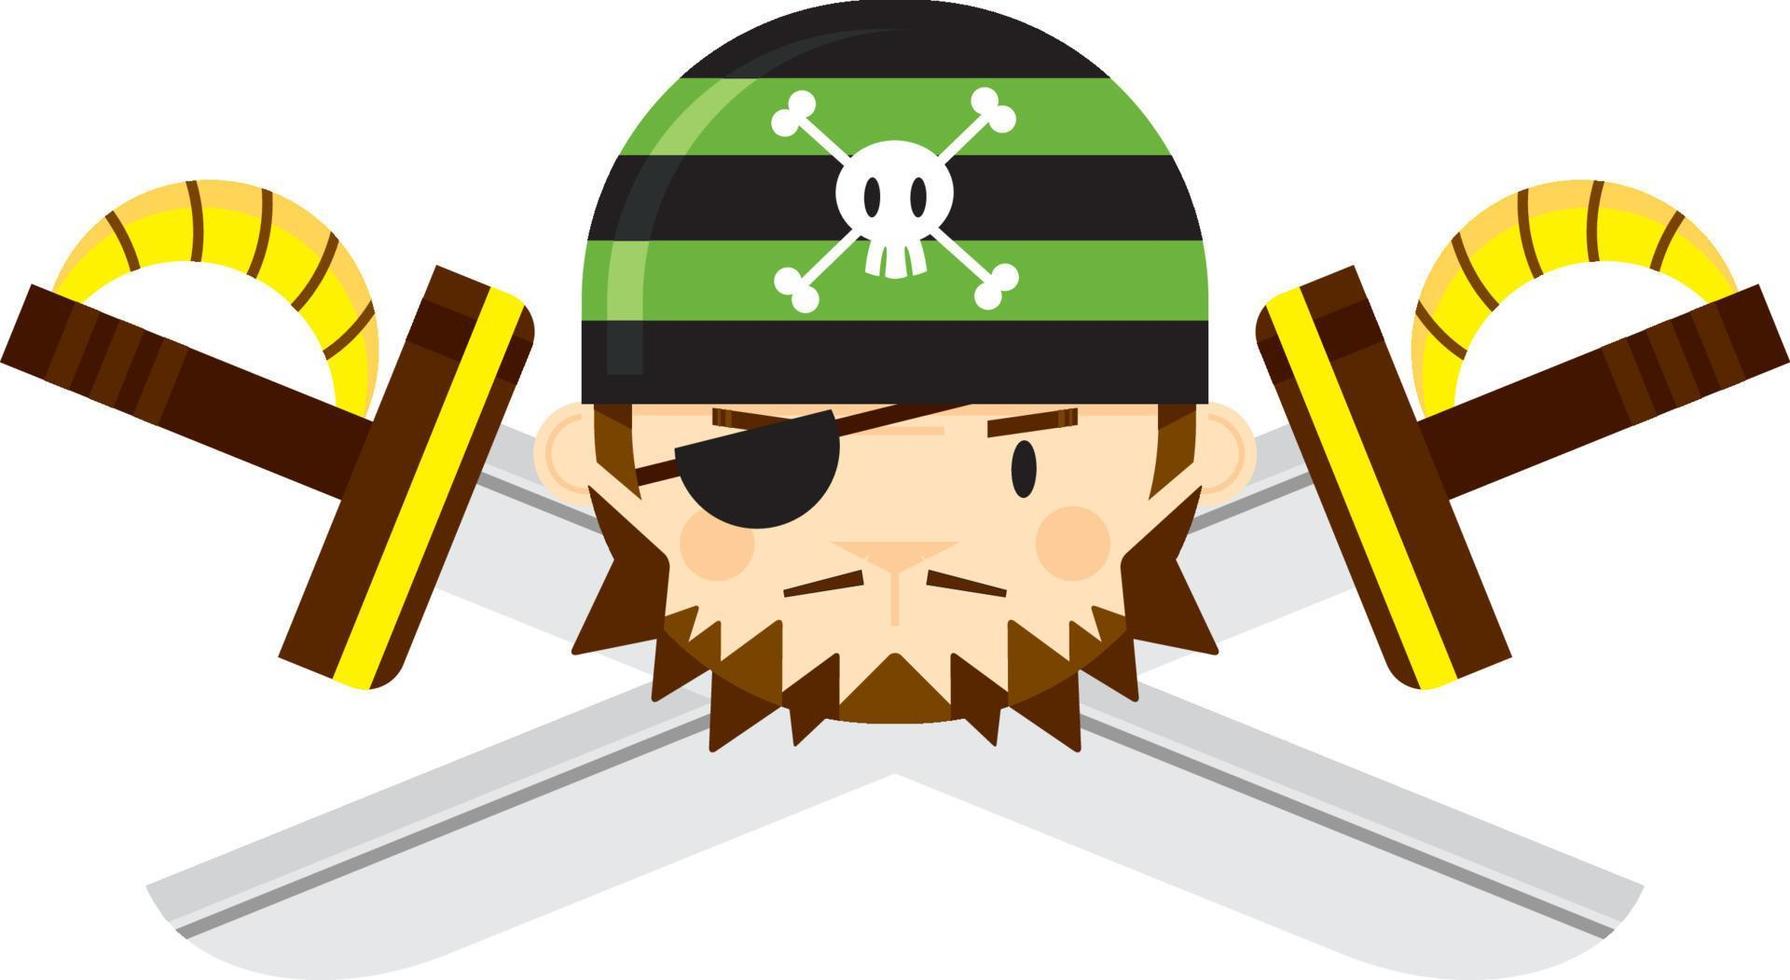 Cartoon Swashbuckling Bandana Pirate with Crossed Swords vector